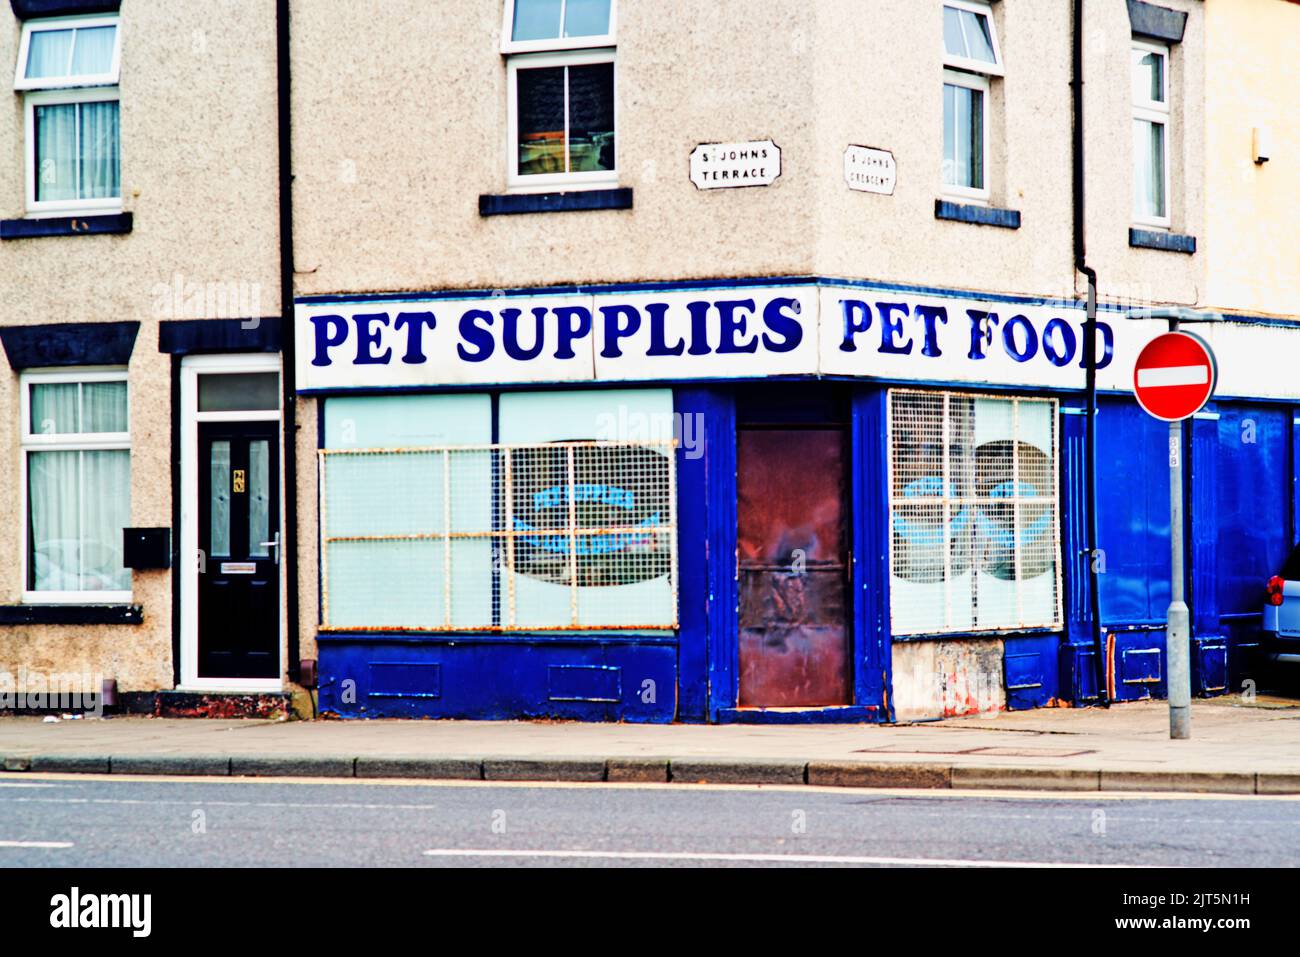 Closed Pet Supplies Store, St Johns Terrace, Darlington, England Stock Photo